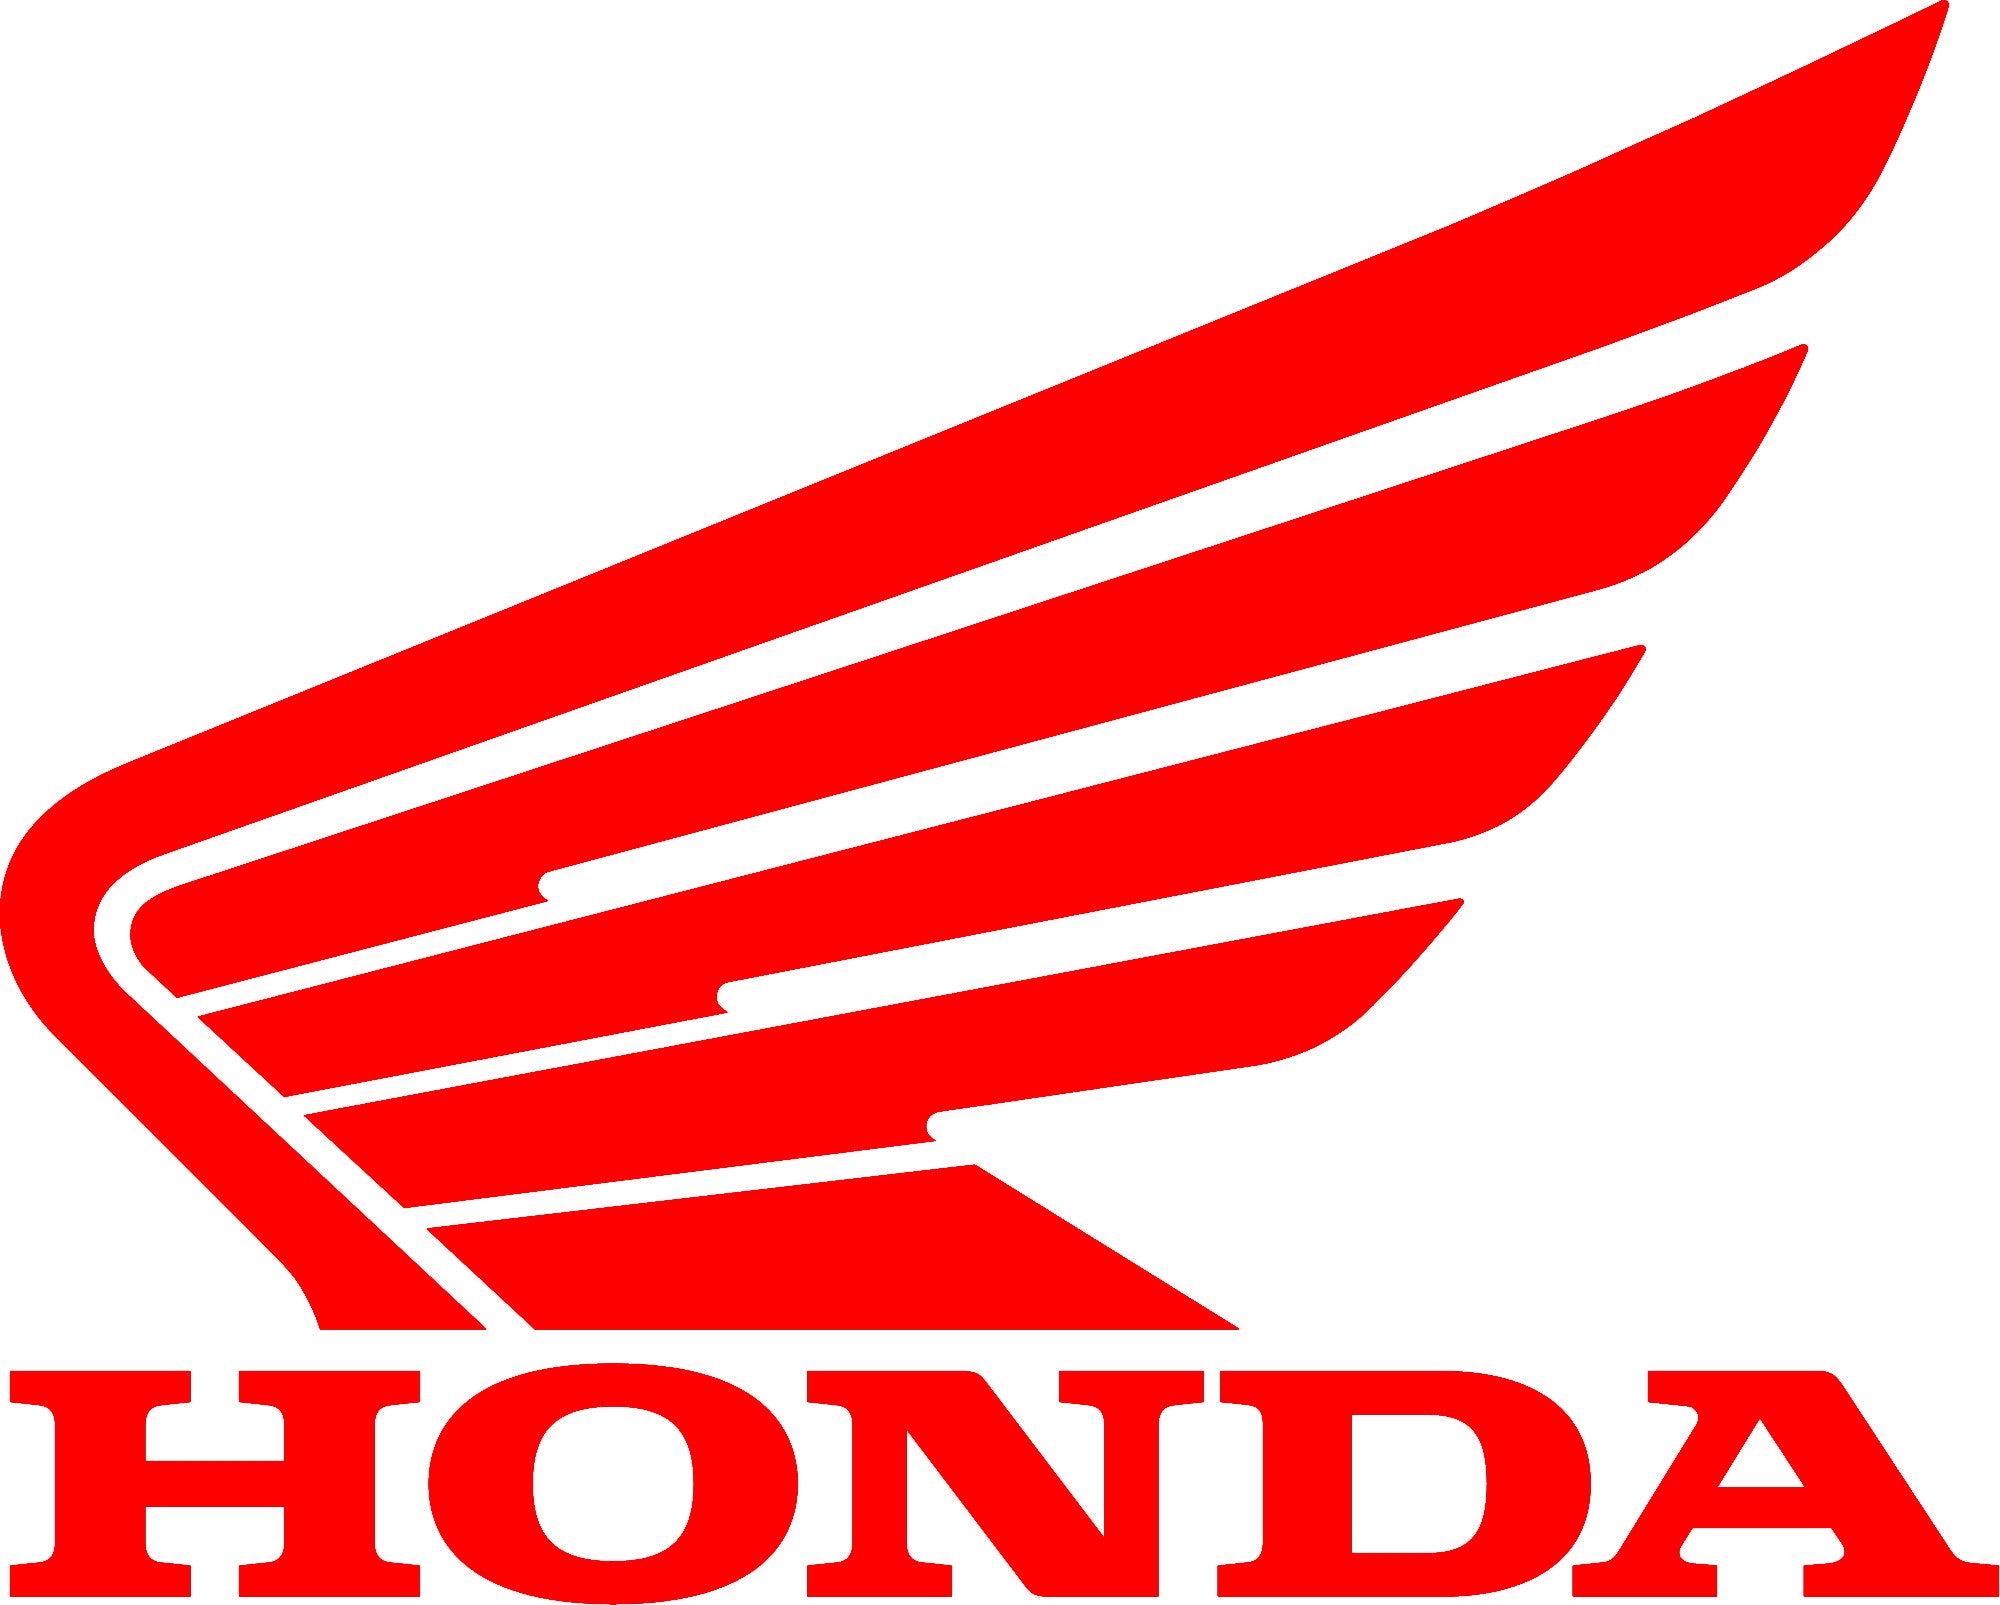  Honda Logo Decal Sticker Tacticalmindz com